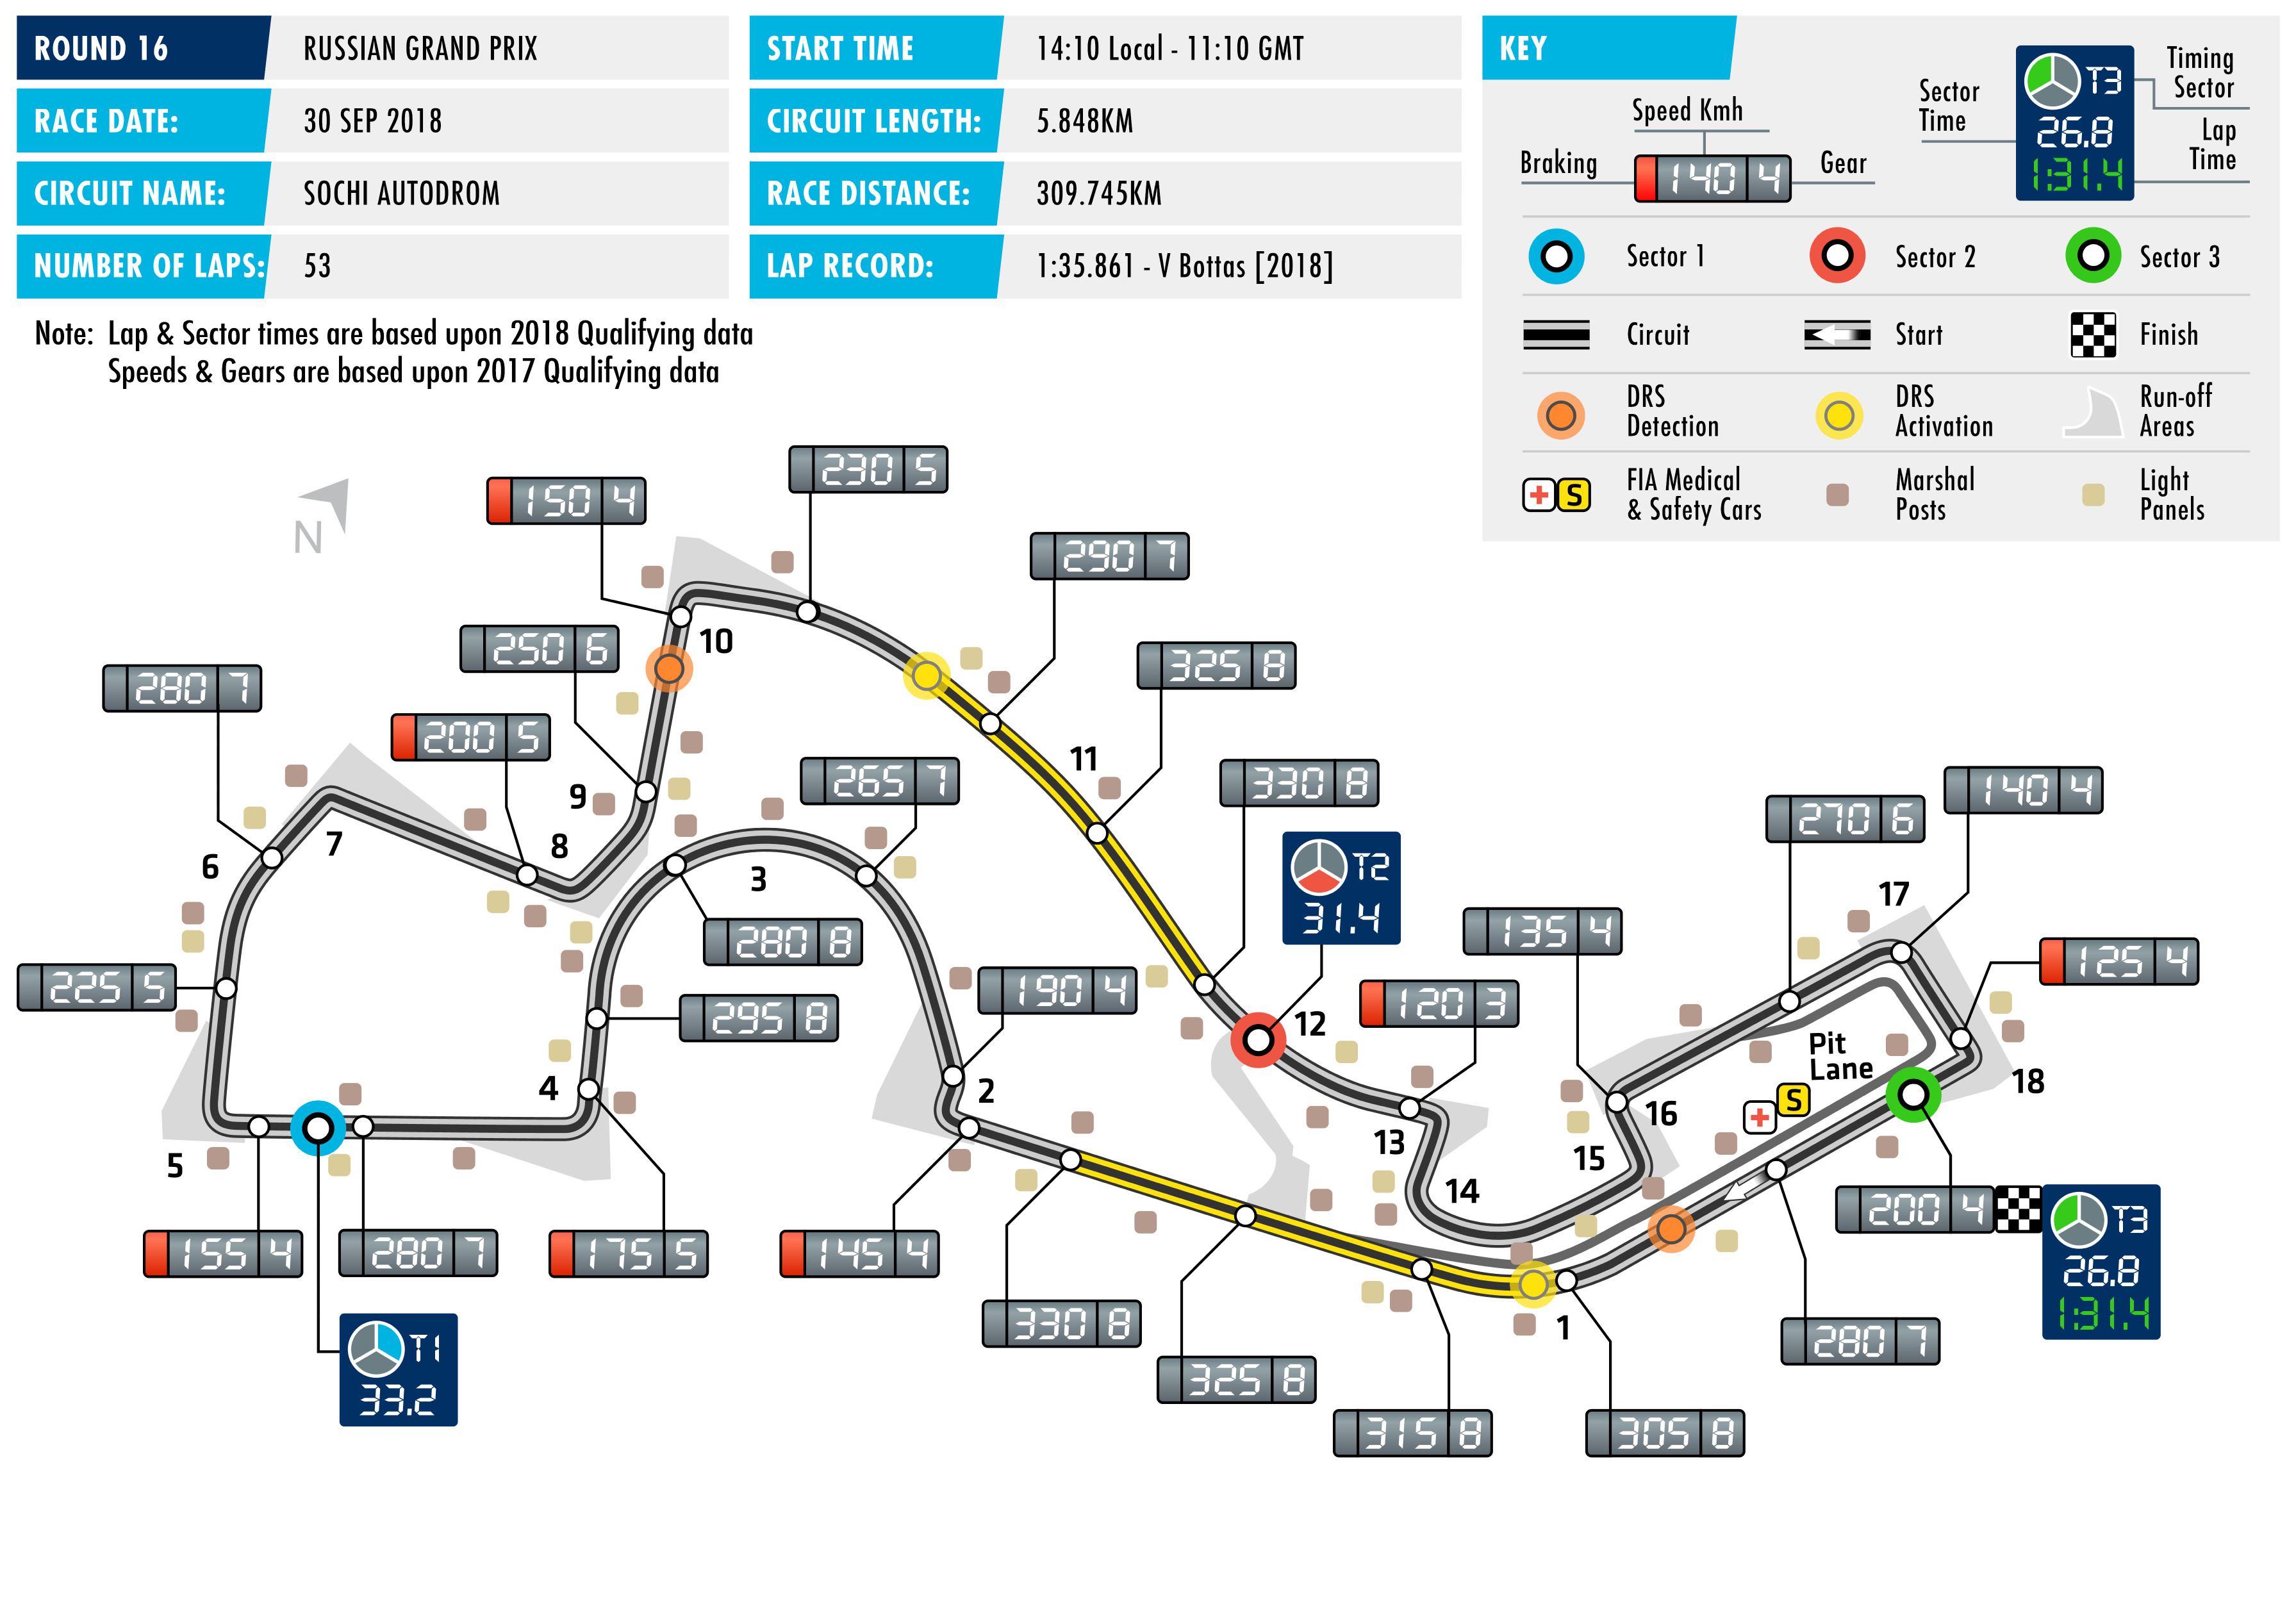 2018 Russian Grand Prix - Circuit Map